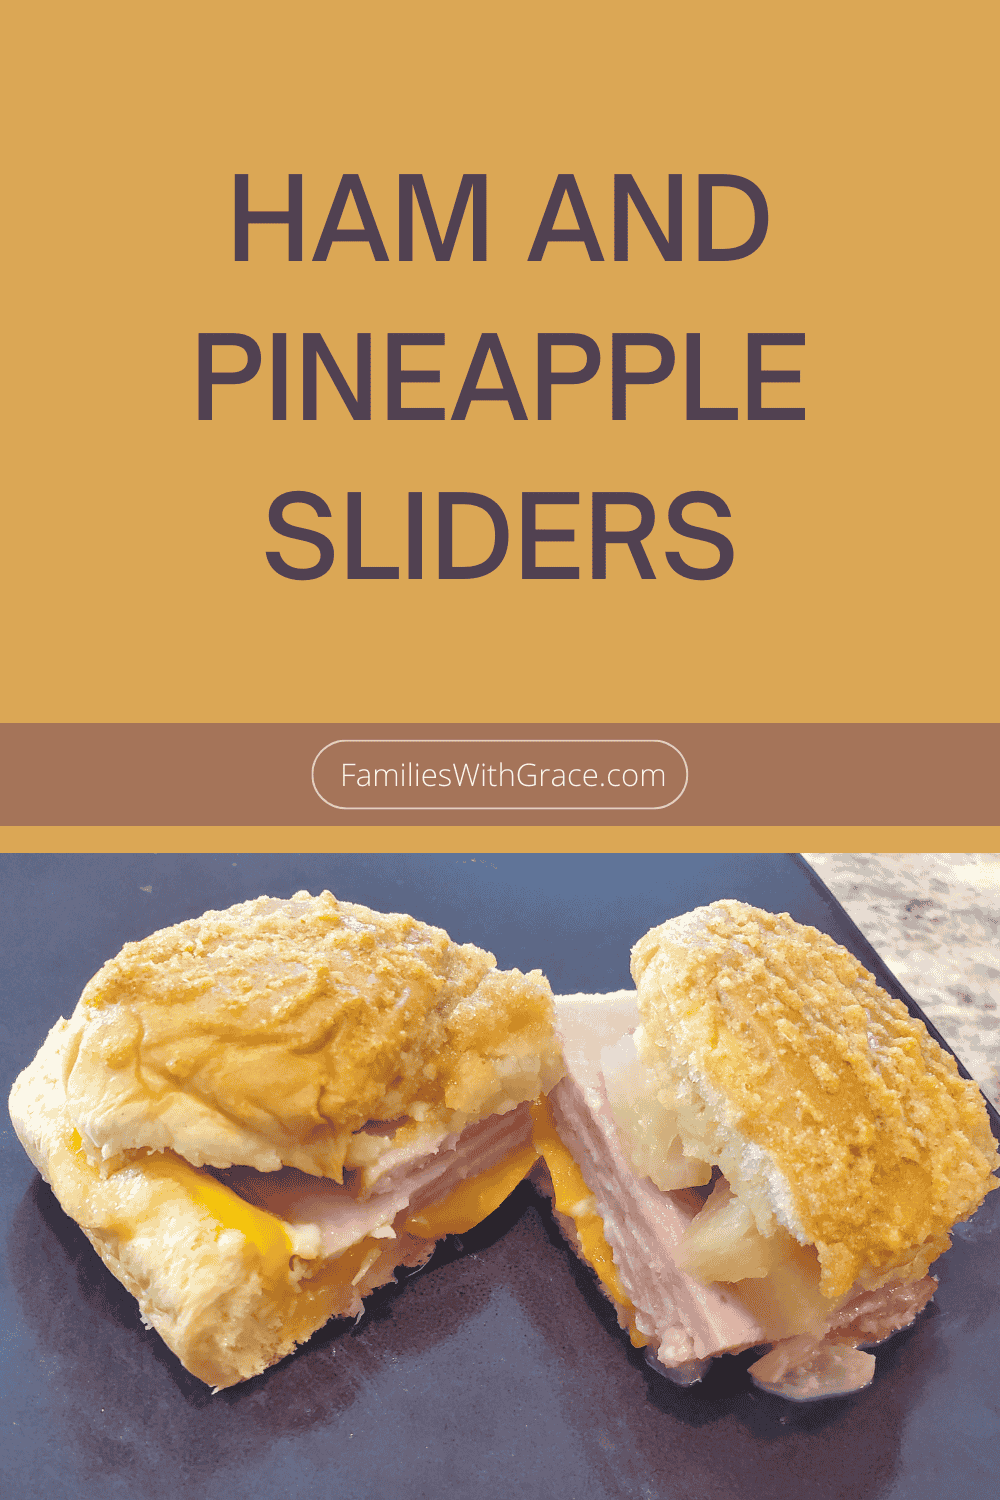 Ham and pineapple sliders